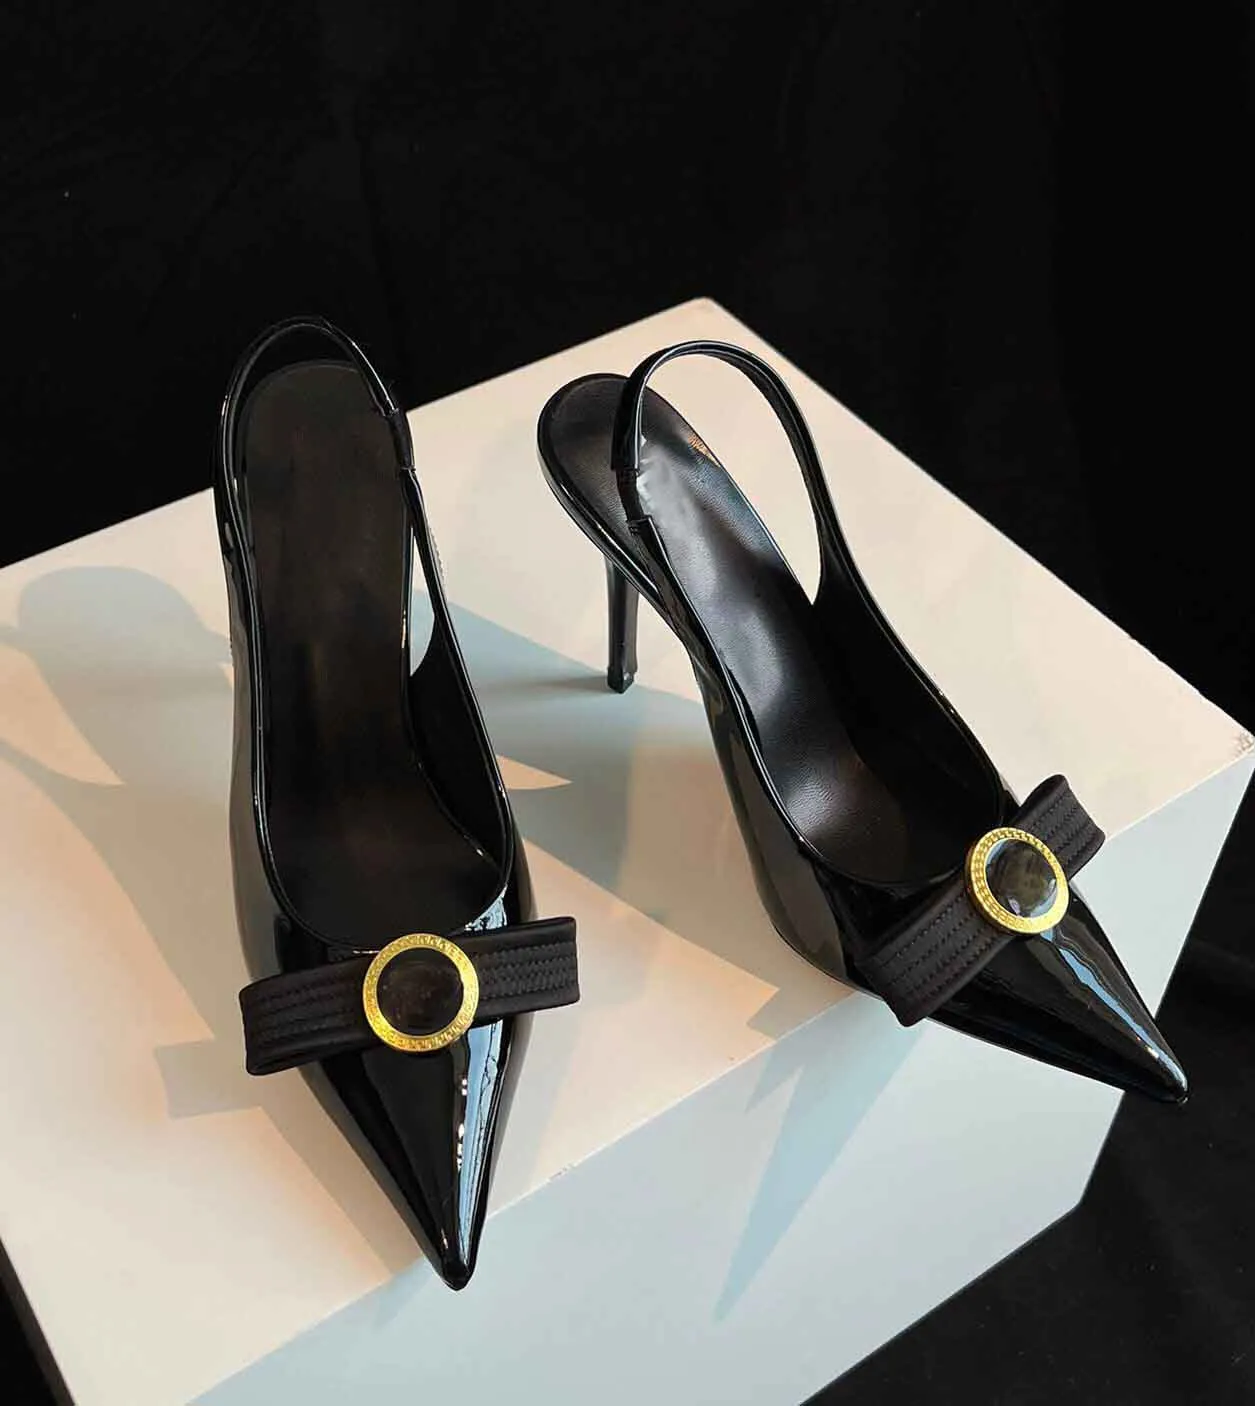 Italien 2024 Summer Gianni Ribbon Women Sandals Shoes Medusi Bow Slingback Patent Leather Stiletto Heels Point Toe Lady Pumps EU35-42